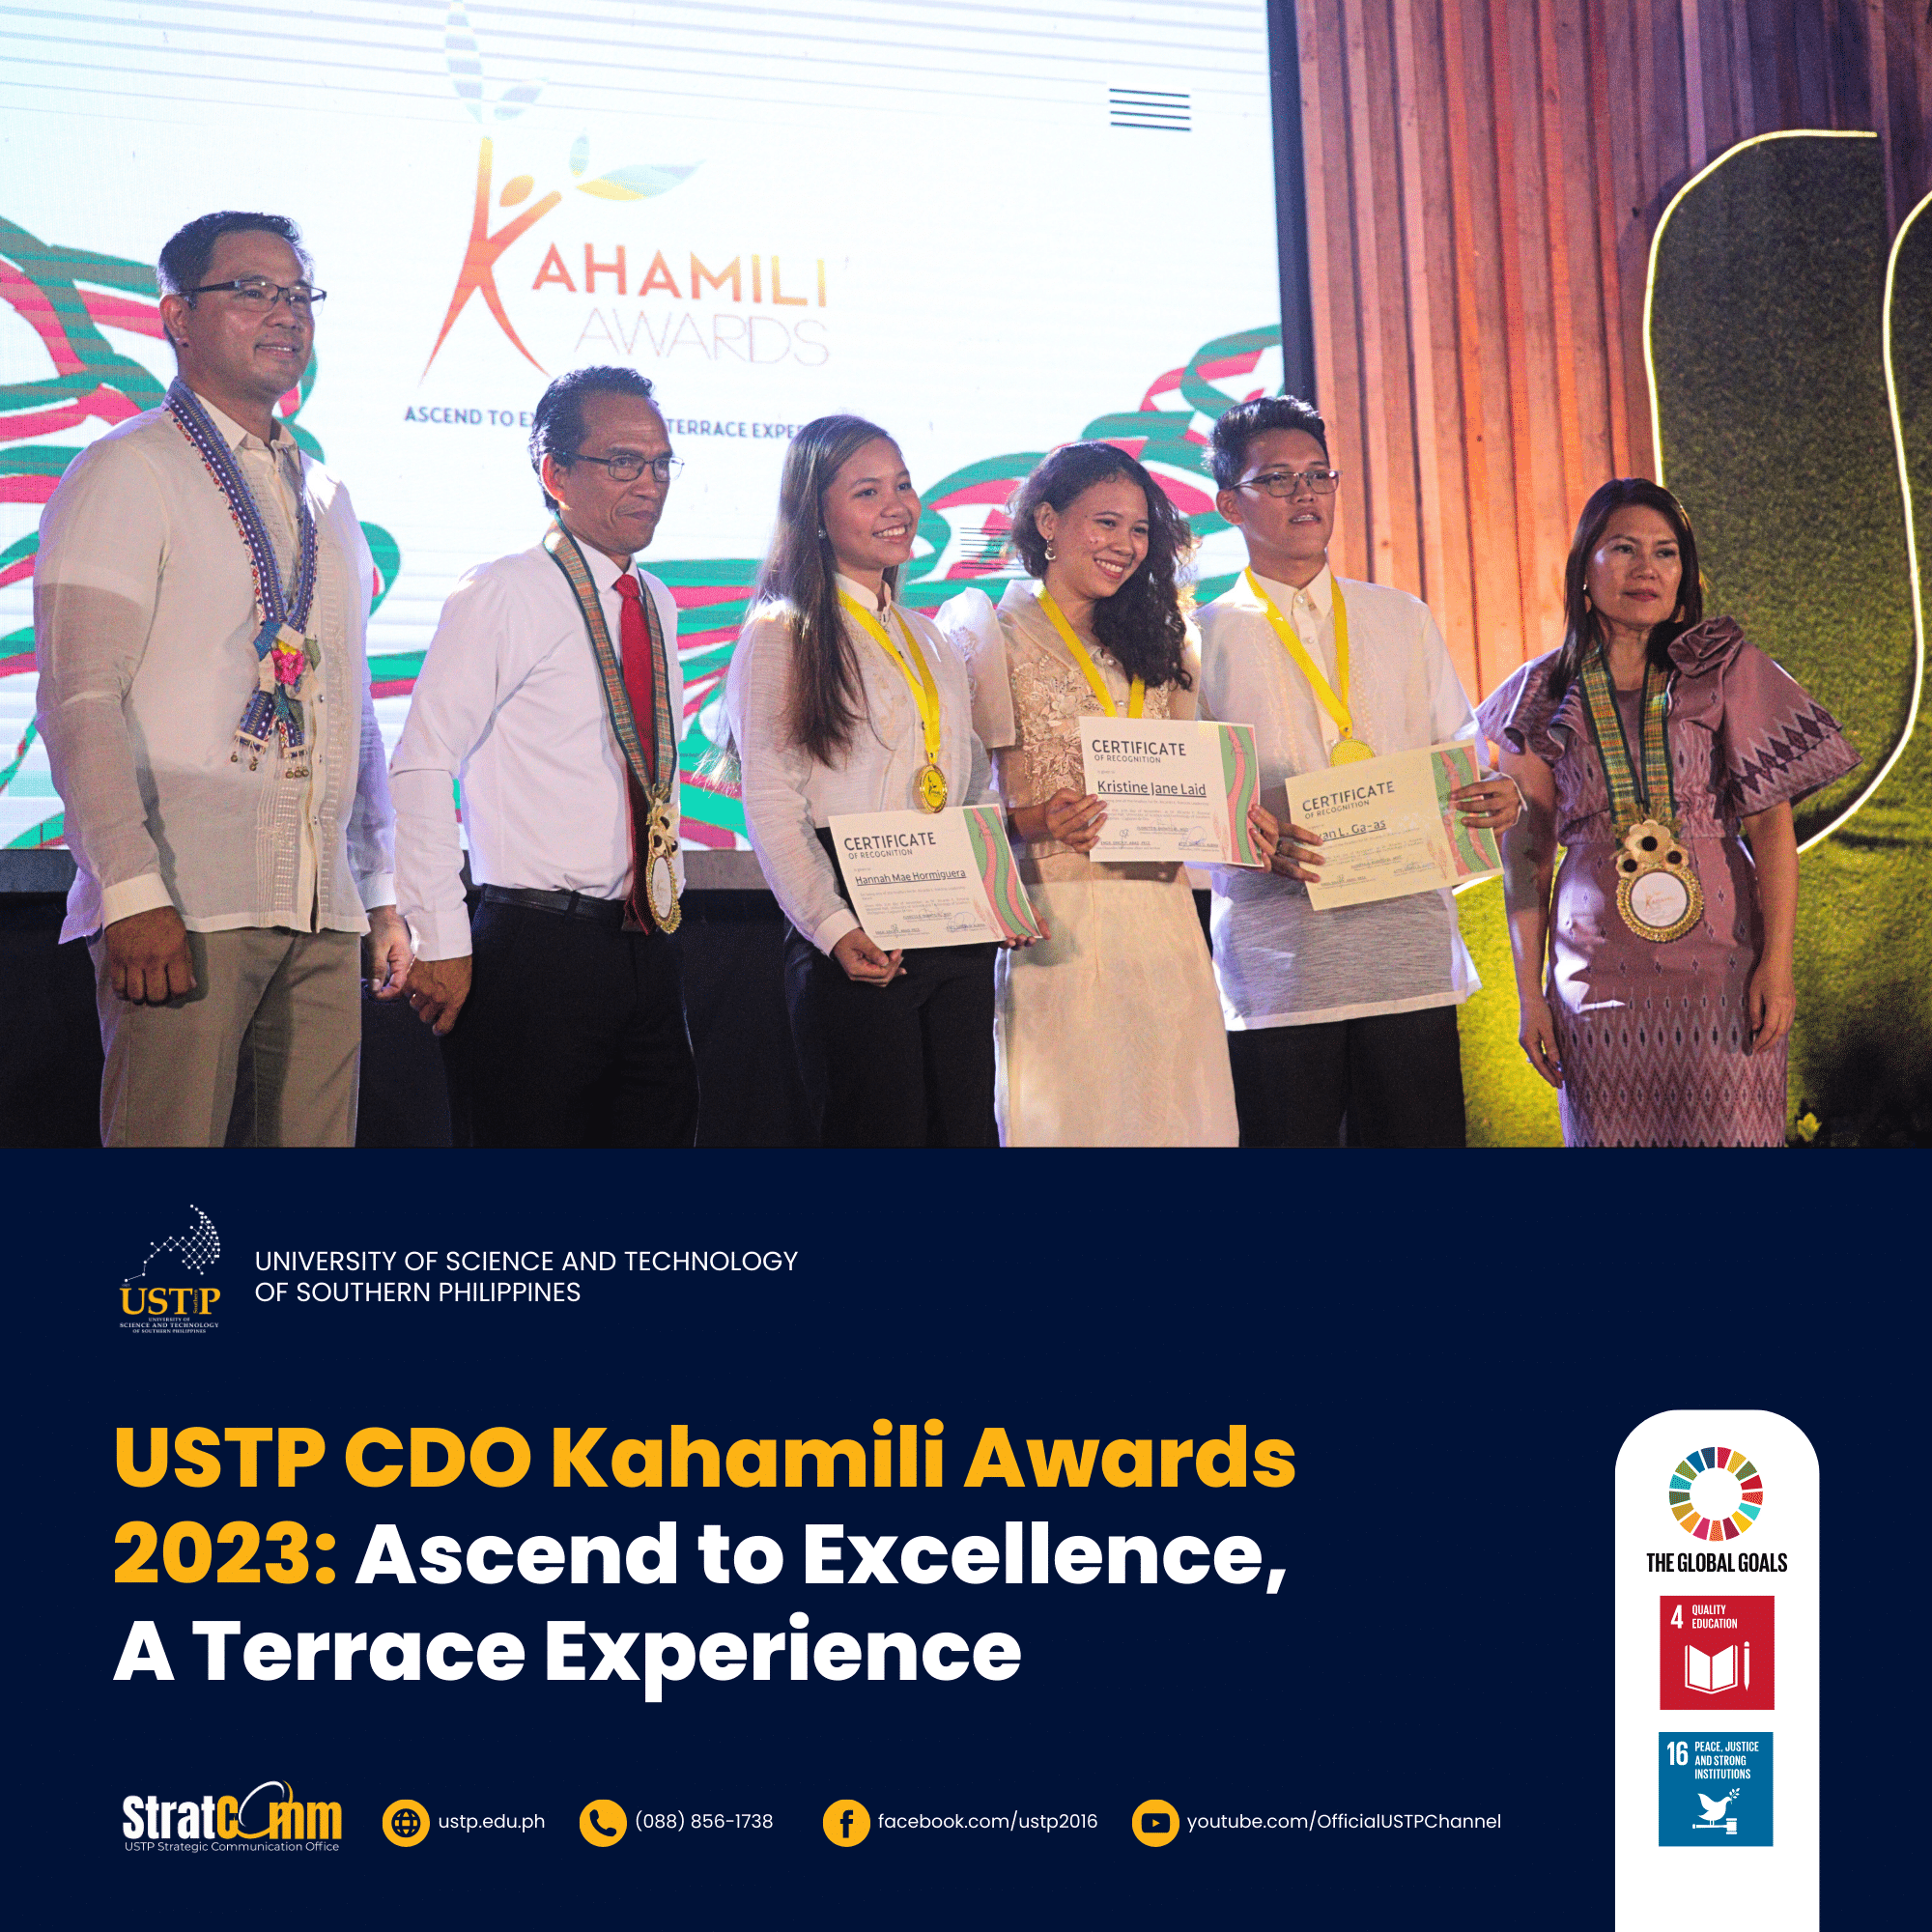 USTP CDO Kahamili Awards 2023 Ascend to Excellence, A Terrace Experience